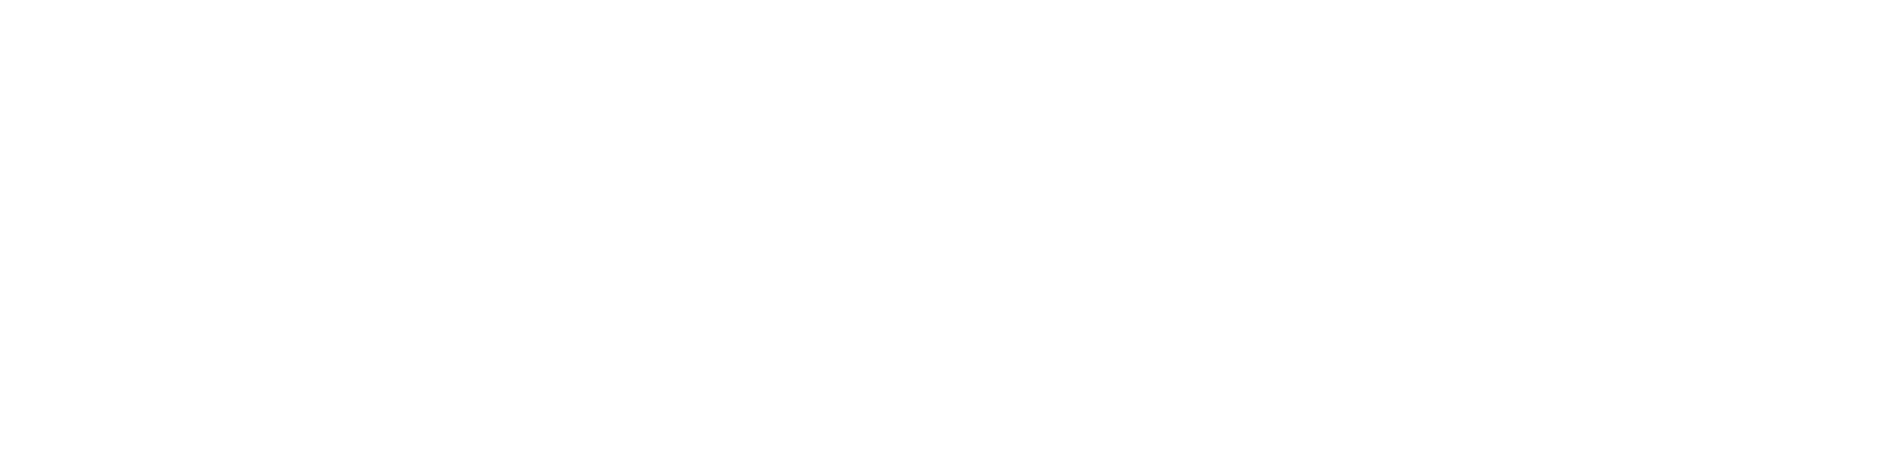 Bitmagic-Logo